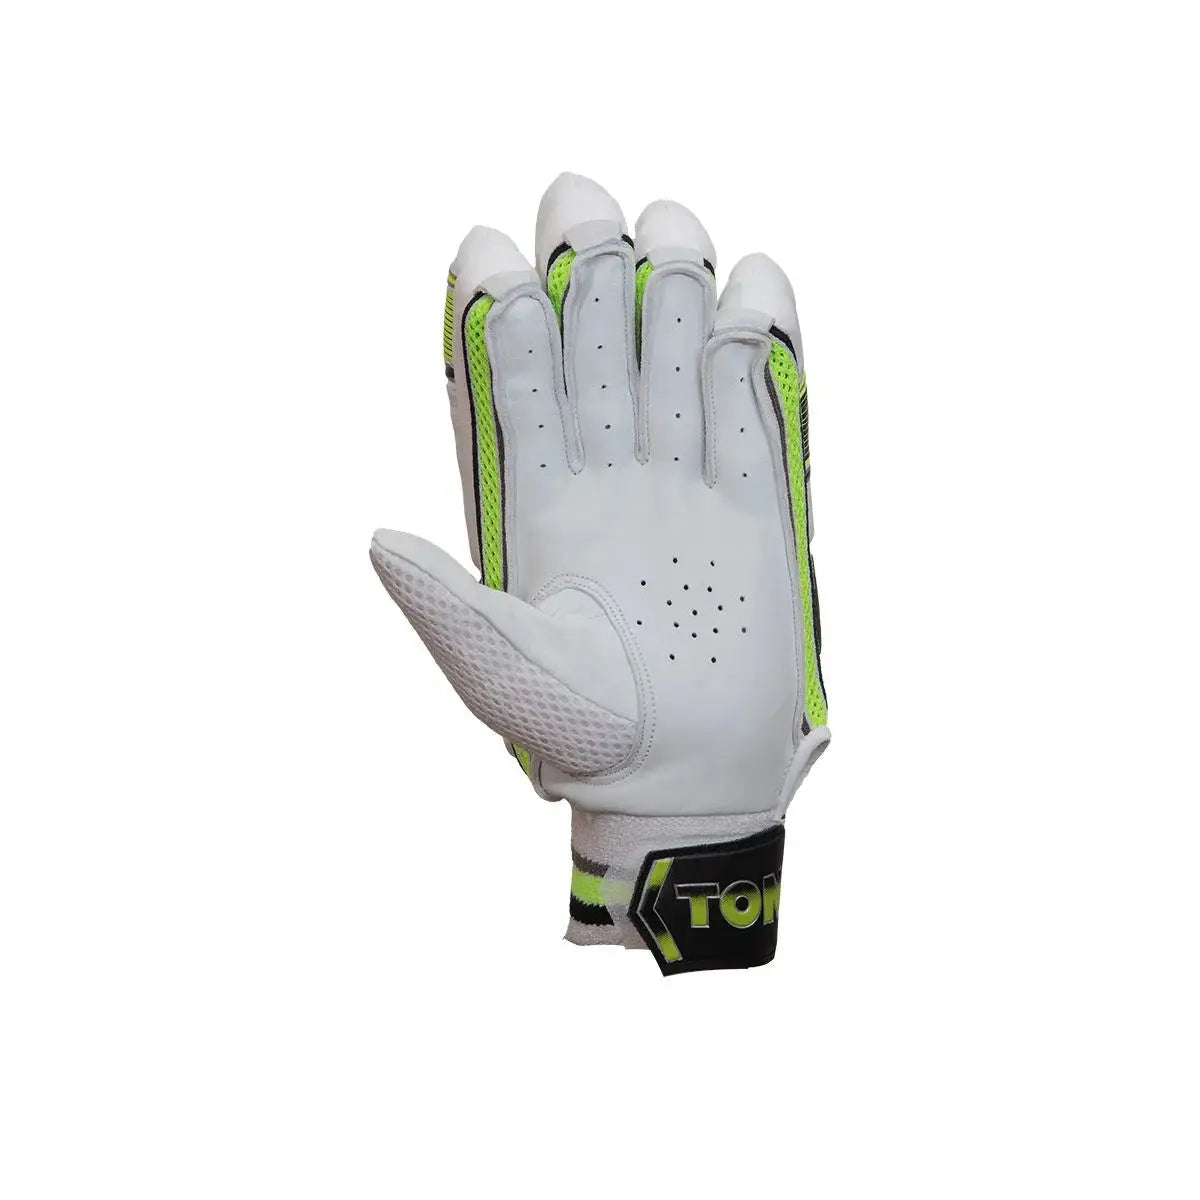 SS TON Supreme Cricket Batting Gloves- High Quality Sheep Leather - GLOVE - BATTING